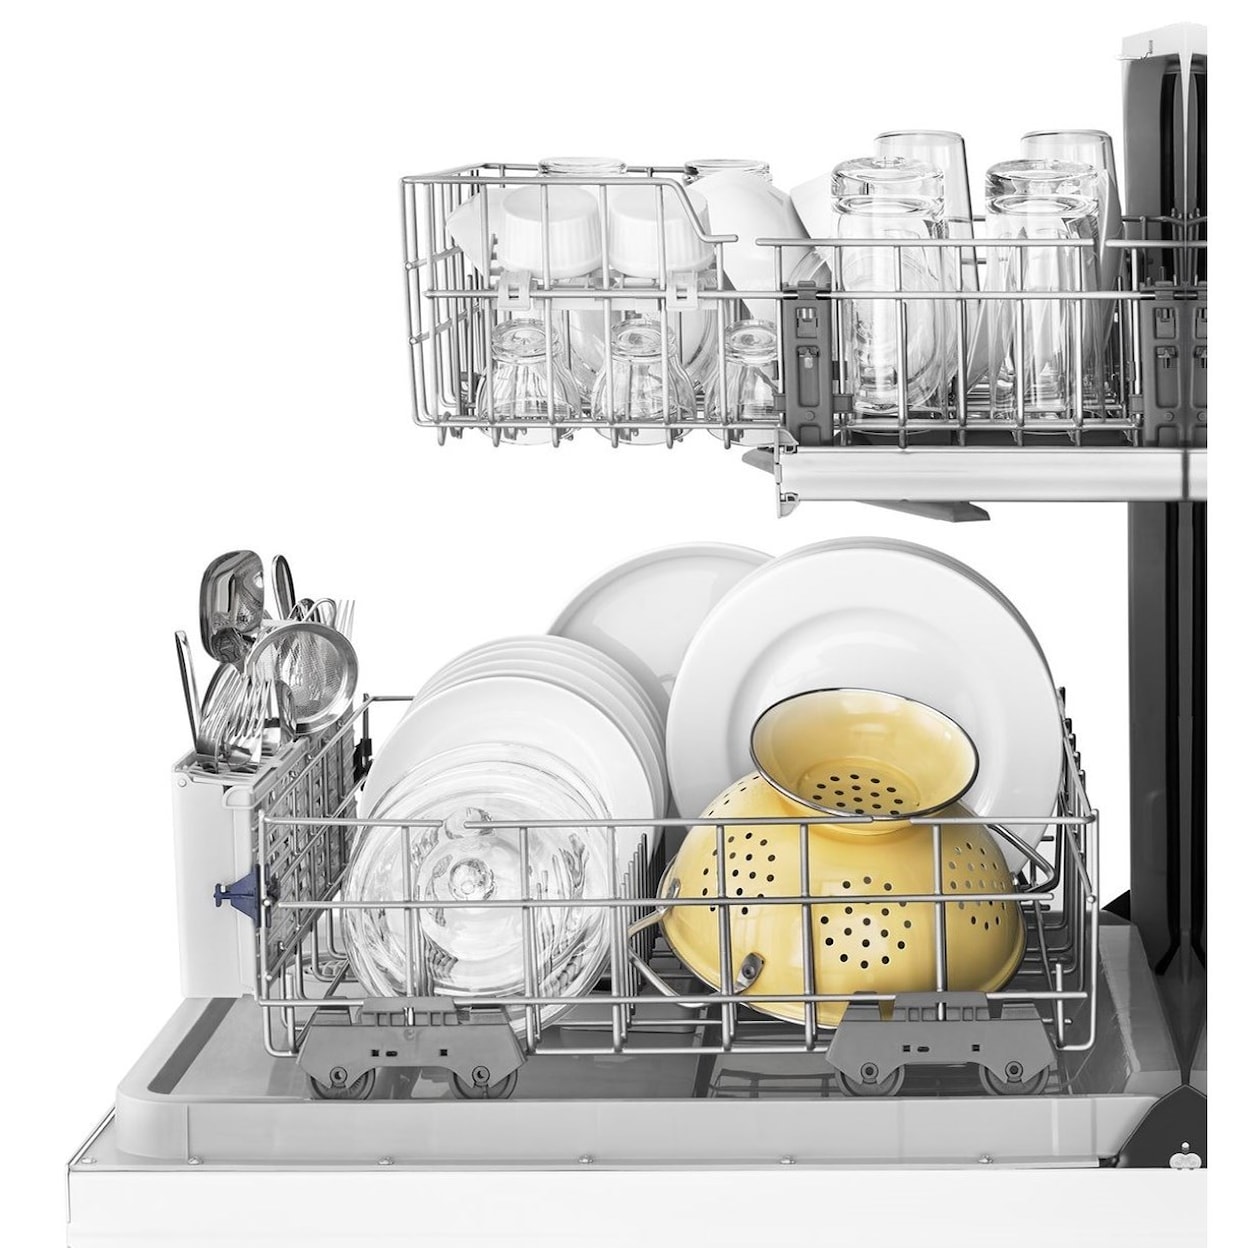 Whirlpool Dishwashers - Whirlpool Dishwasher with Sensor Cycle